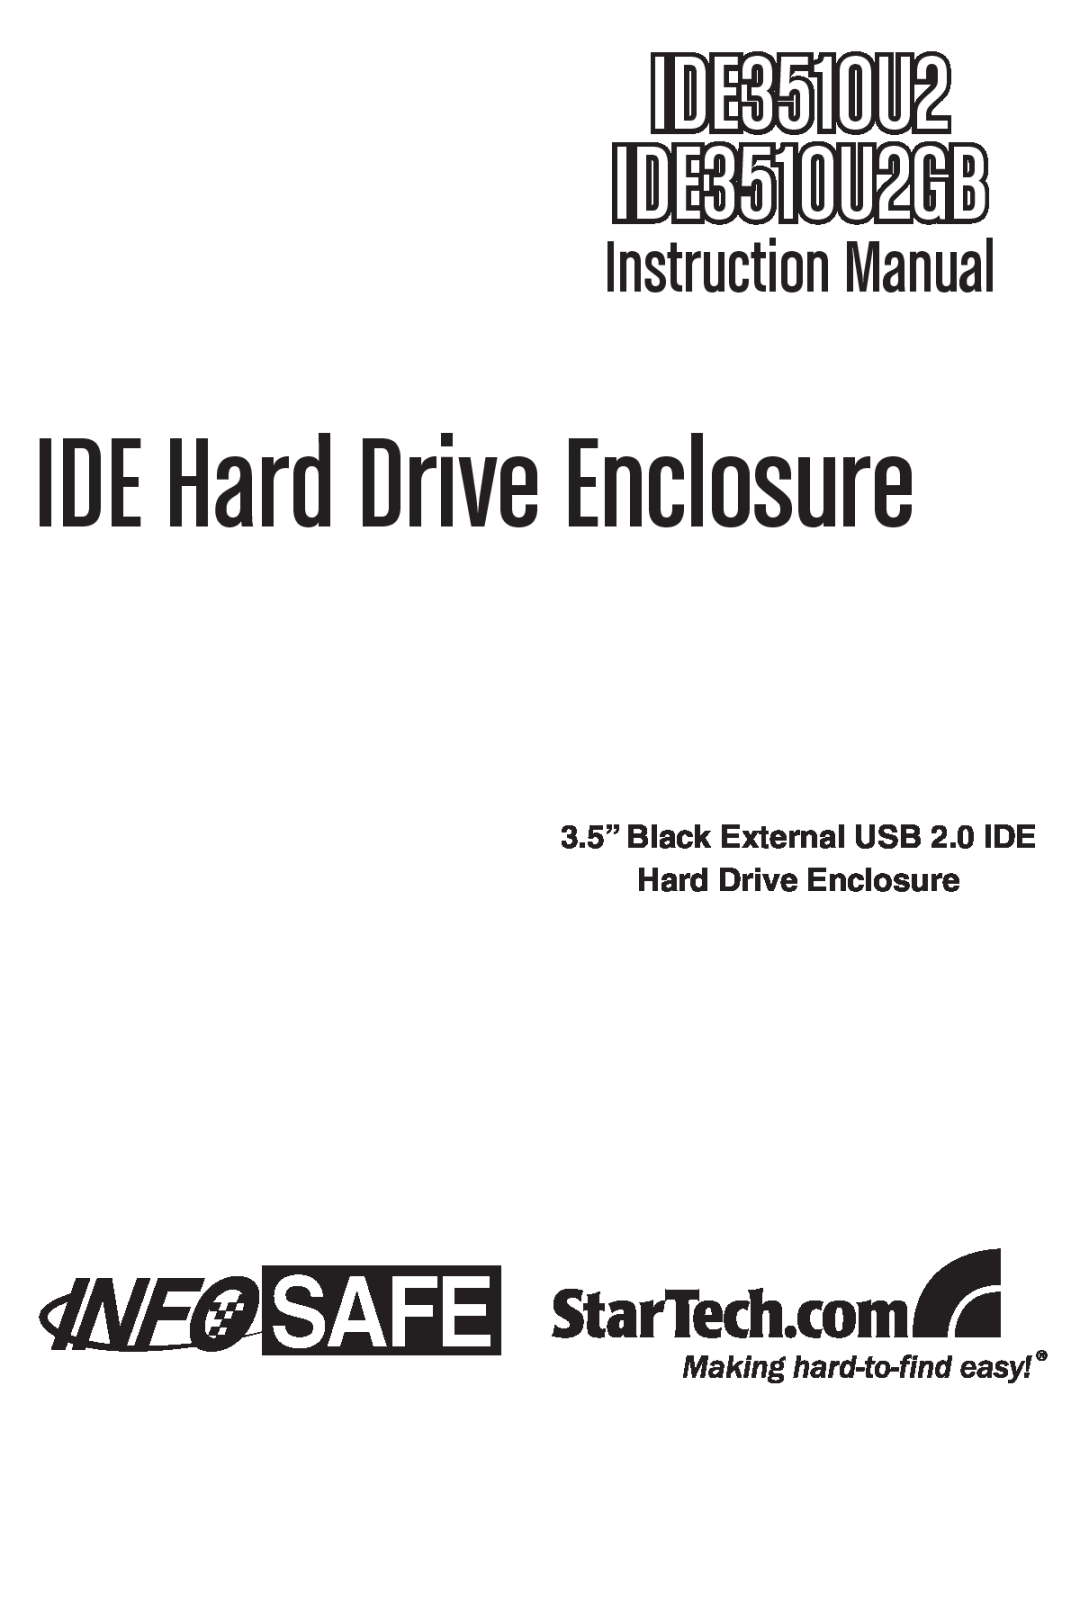 StarTech.com instruction manual 3.5” Black External USB 2.0 IDE Hard Drive Enclosure, IDE3510U2GB, Instruction Manual 